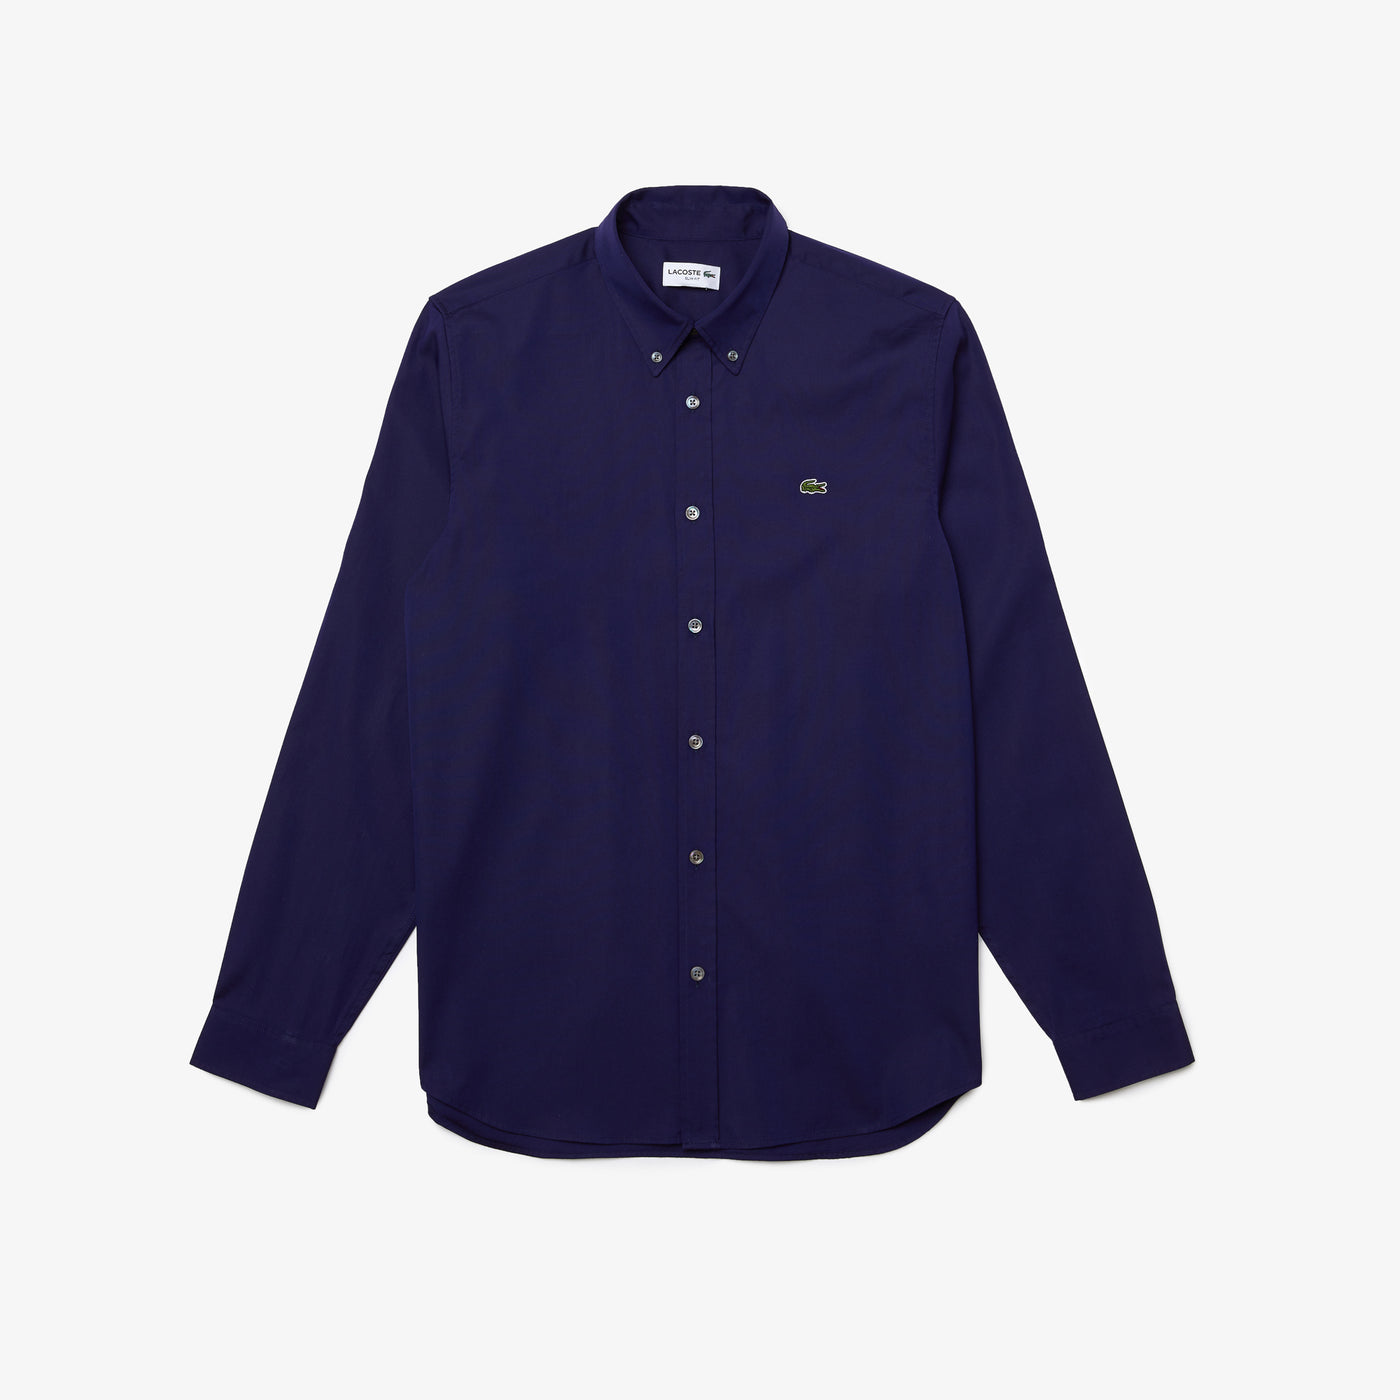 Shop The Latest Collection Of Lacoste Men’S Slim Fit Premium Cotton Shirt - Ch1843 In Lebanon